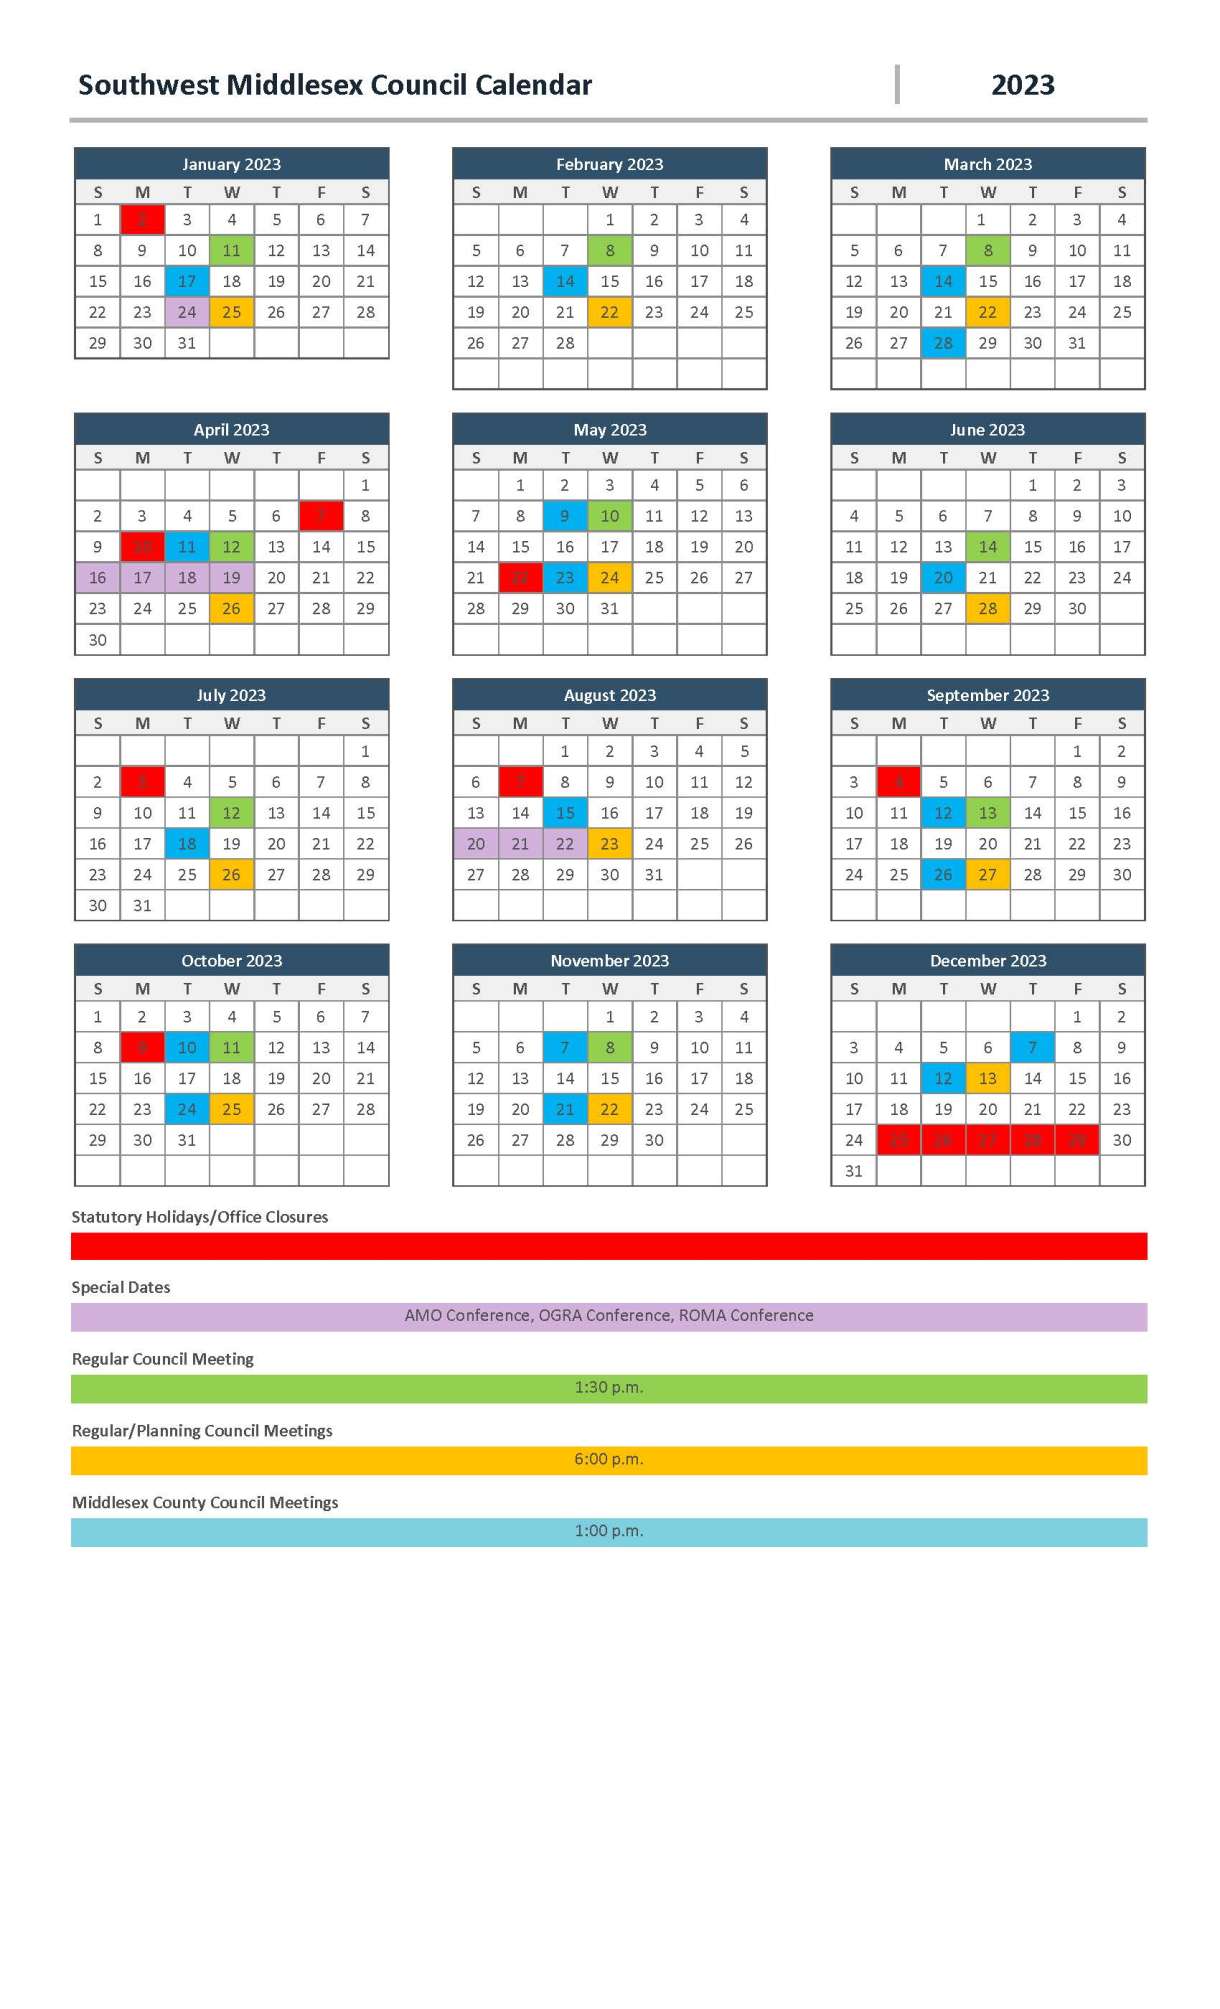 Updated SWM Council Schedule April 2023